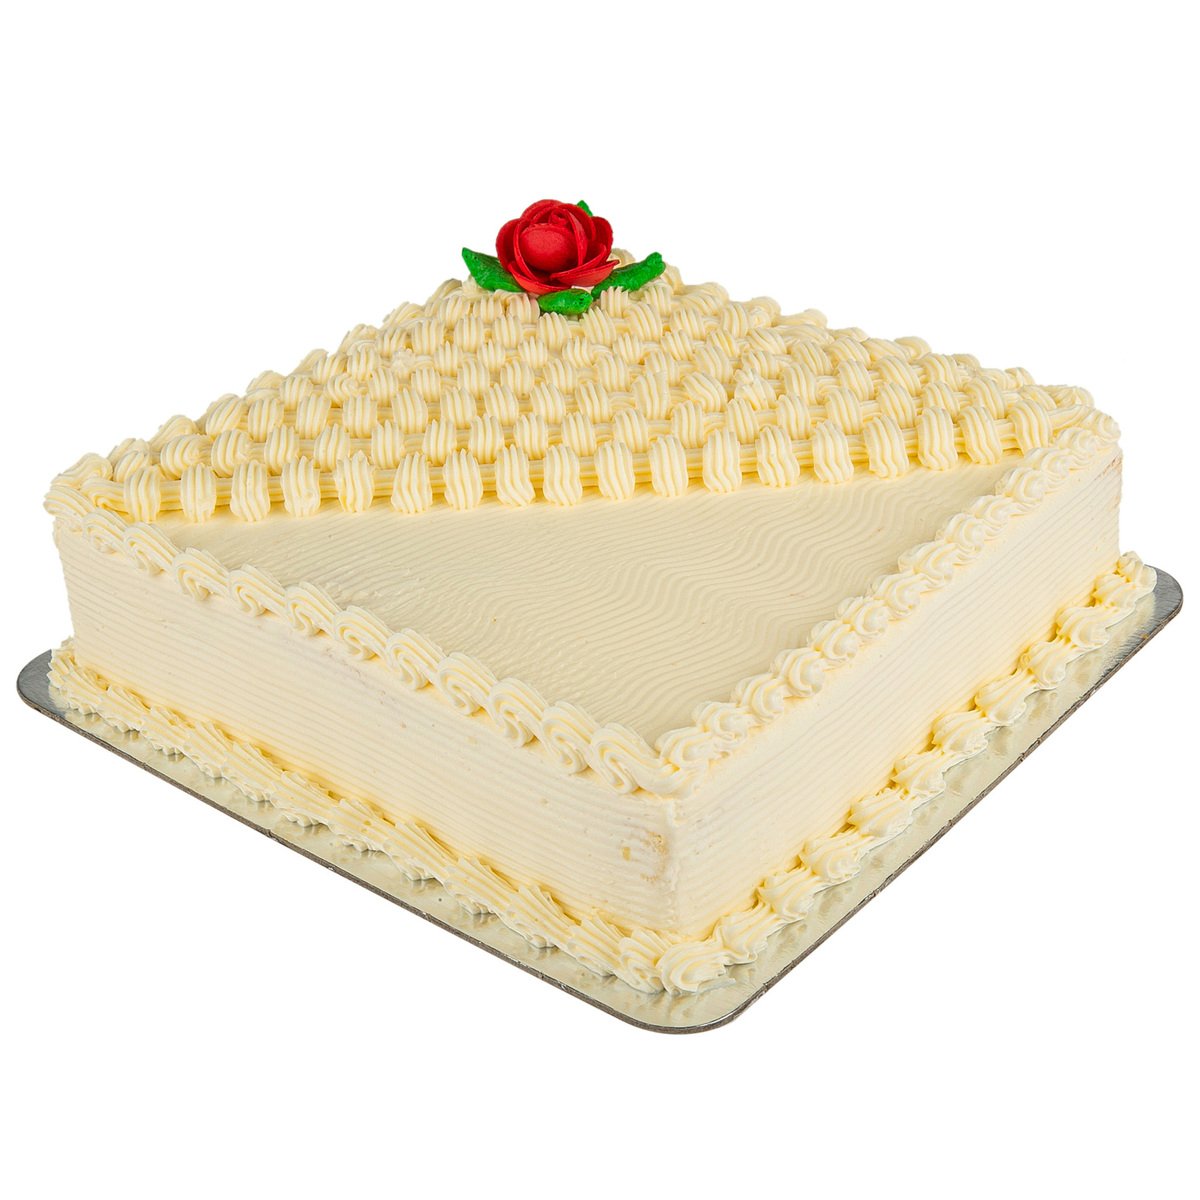 Vanilla Butter Cream Cake Medium 1.1 kg